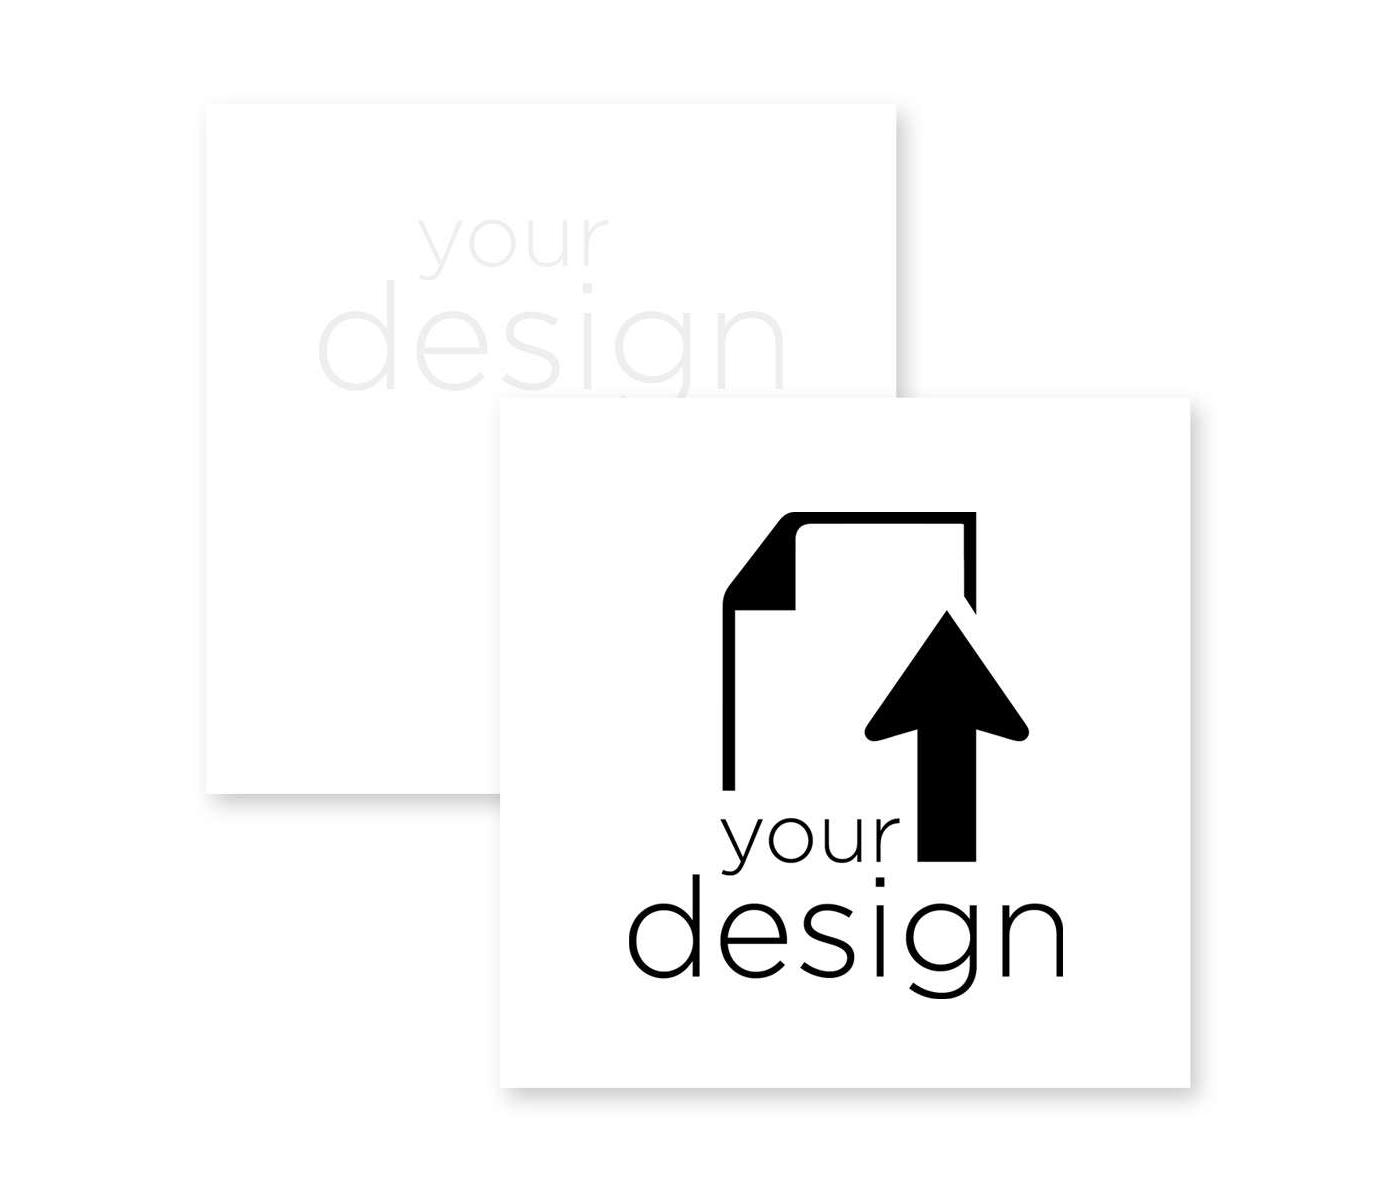 Your Design Premium Flyer 6"x6" - White